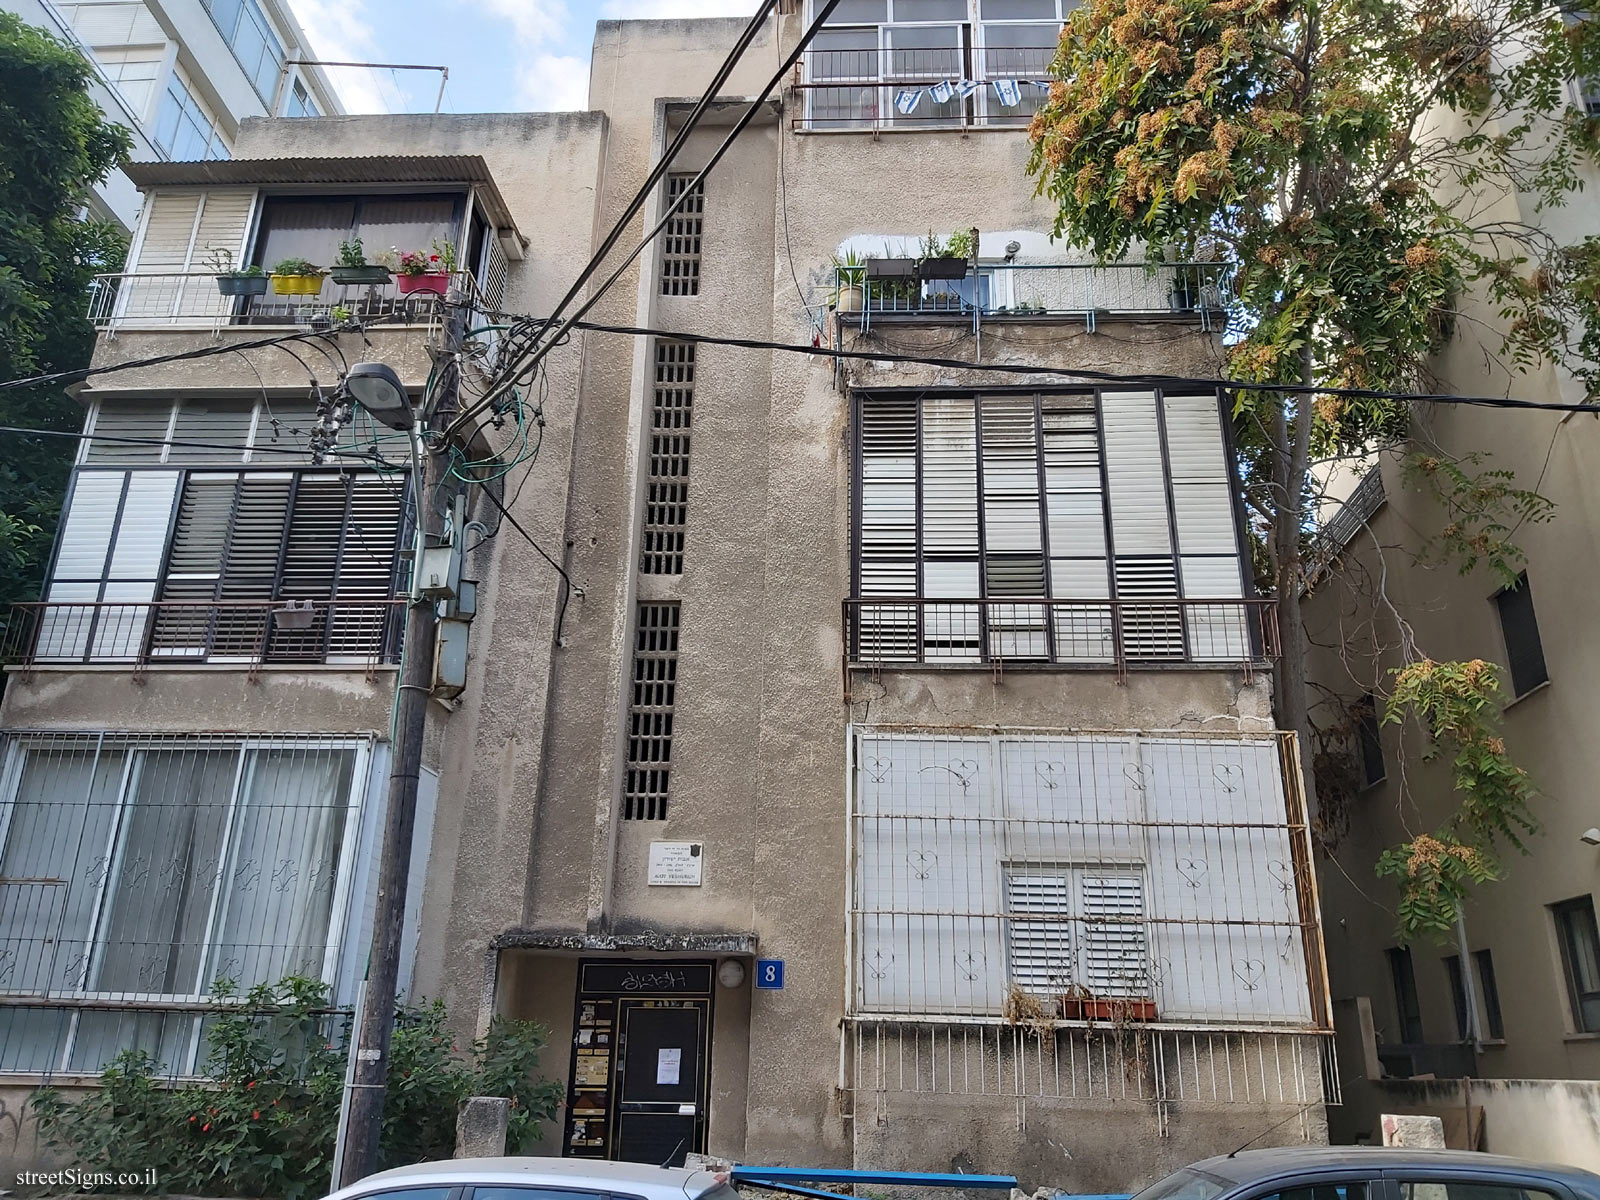 The house of Avot Yeshurun - Berdyczewski St 8, Tel Aviv-Yafo, Israel